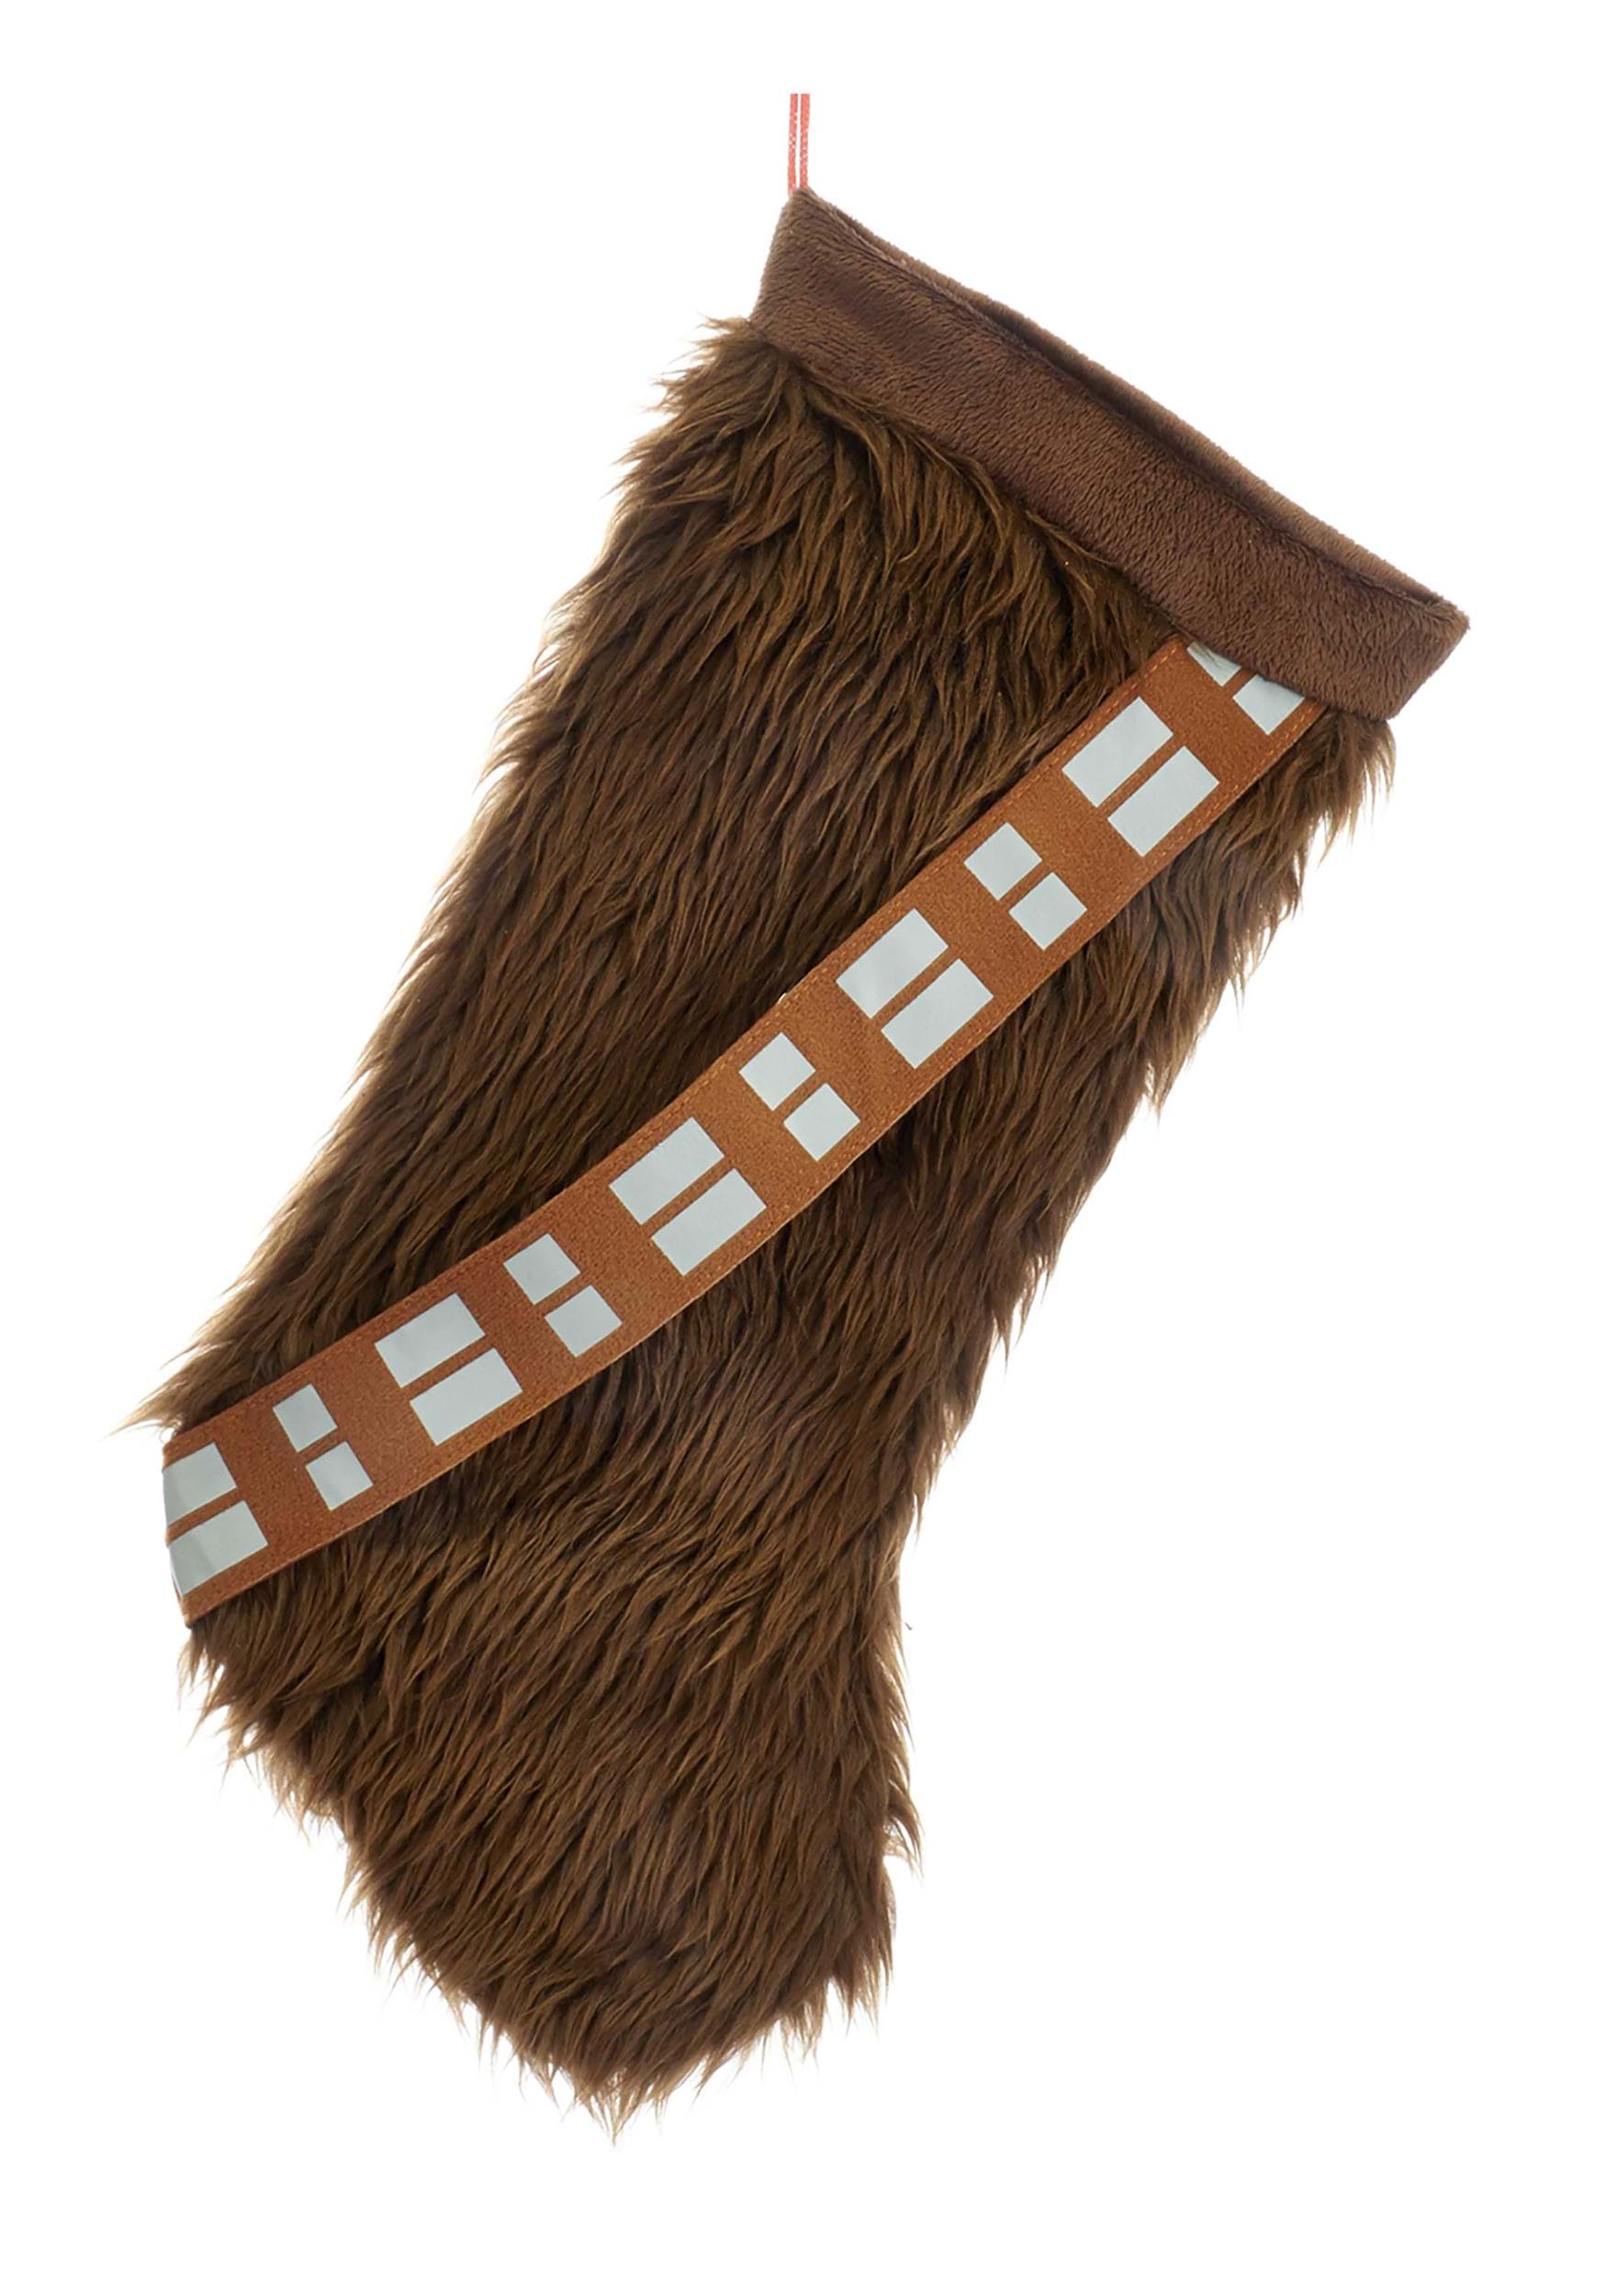 18" Chewbacca Stocking from Star Wars